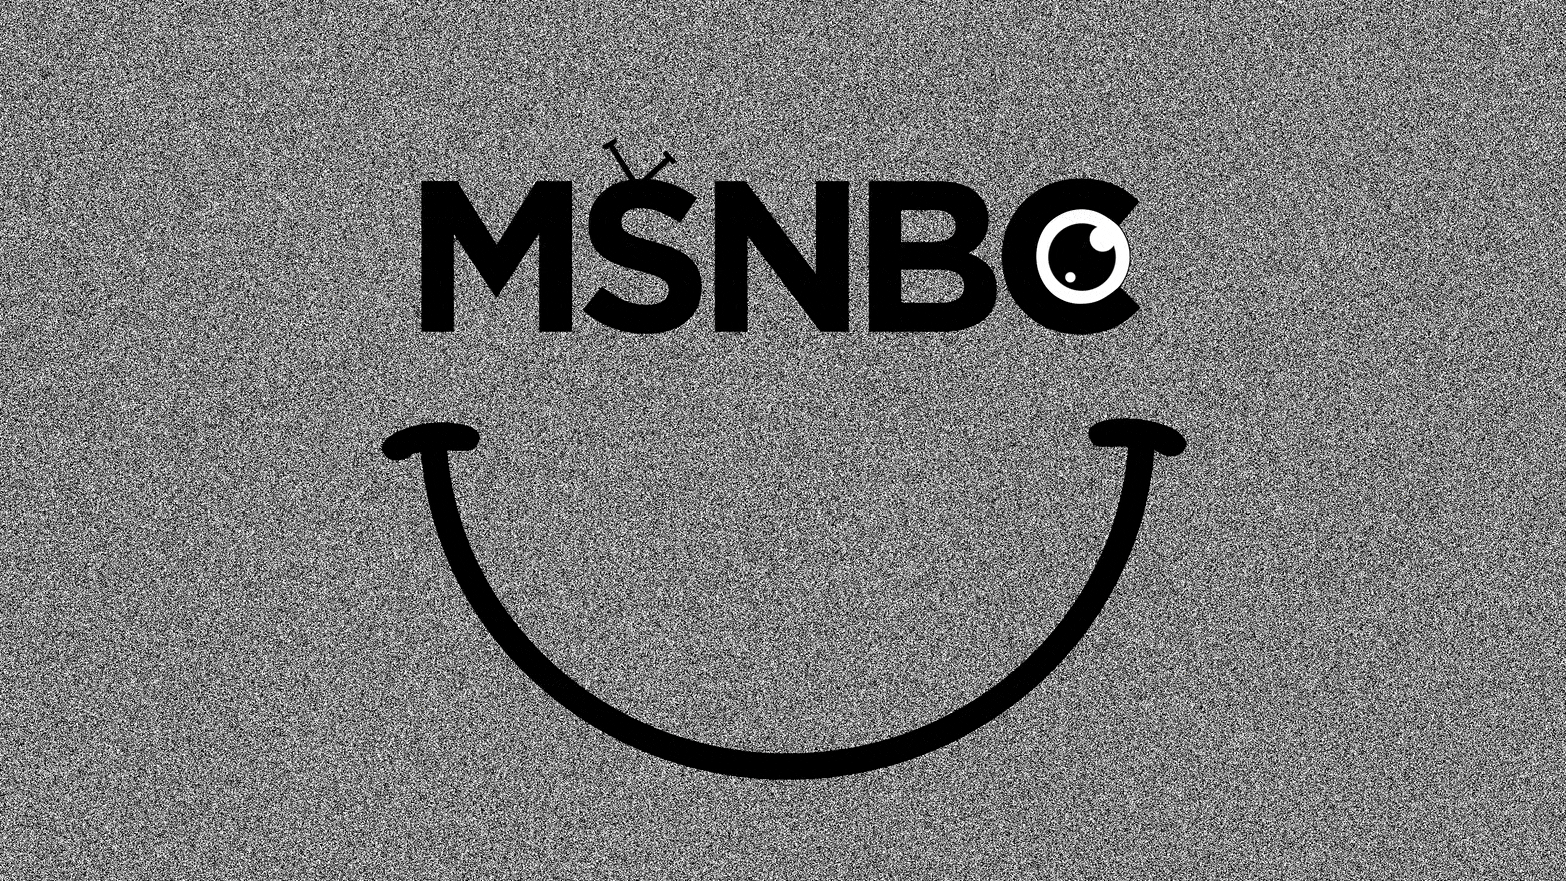 A smiley face using the MSNBC logo